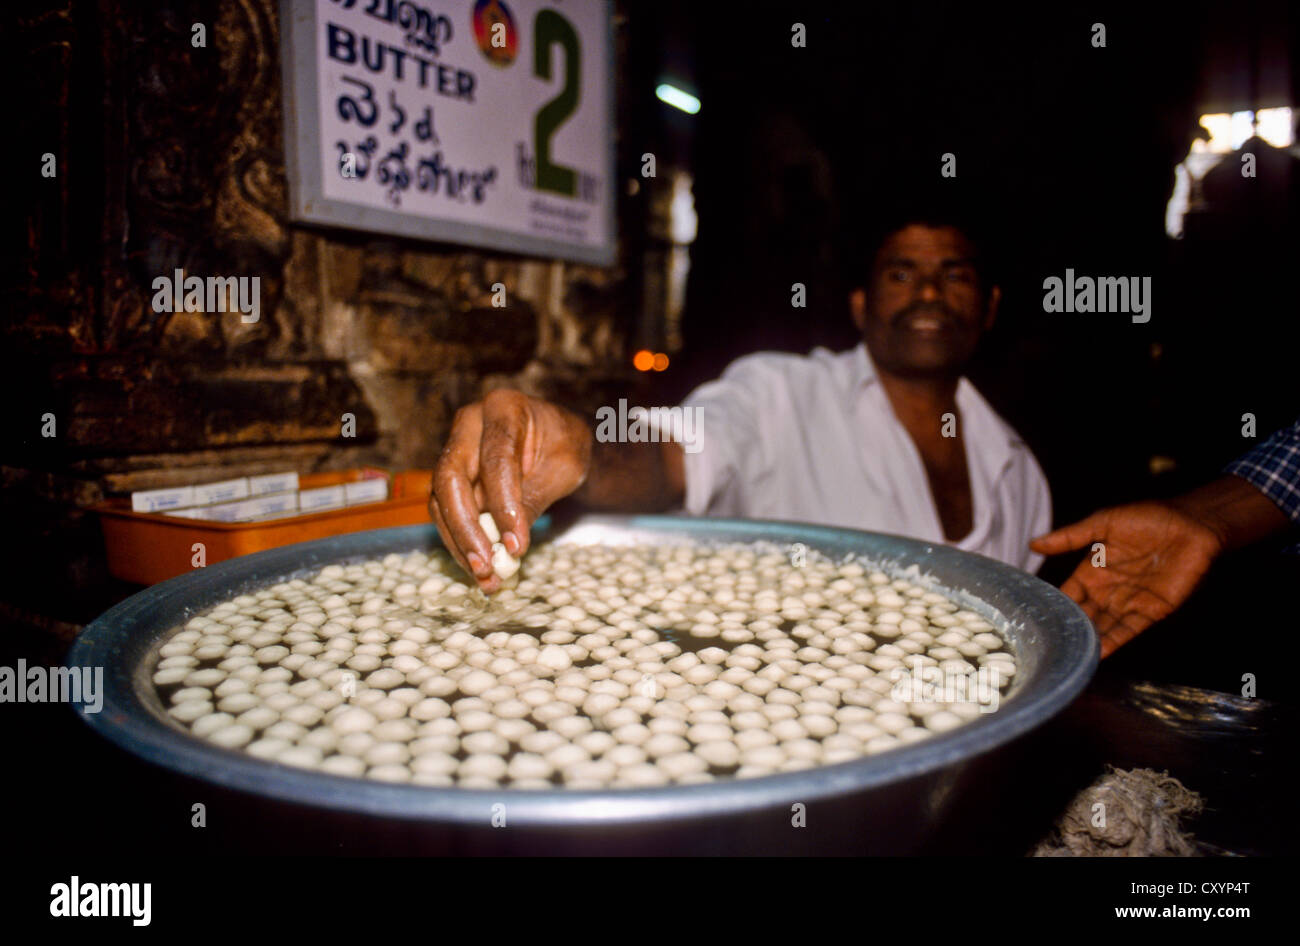 Butterballs for sale as offerings to the gods, in Meenakshi-Sundareswar Temple of Madurai, Madurai, Tamil Nadu, India, Asia Stock Photo